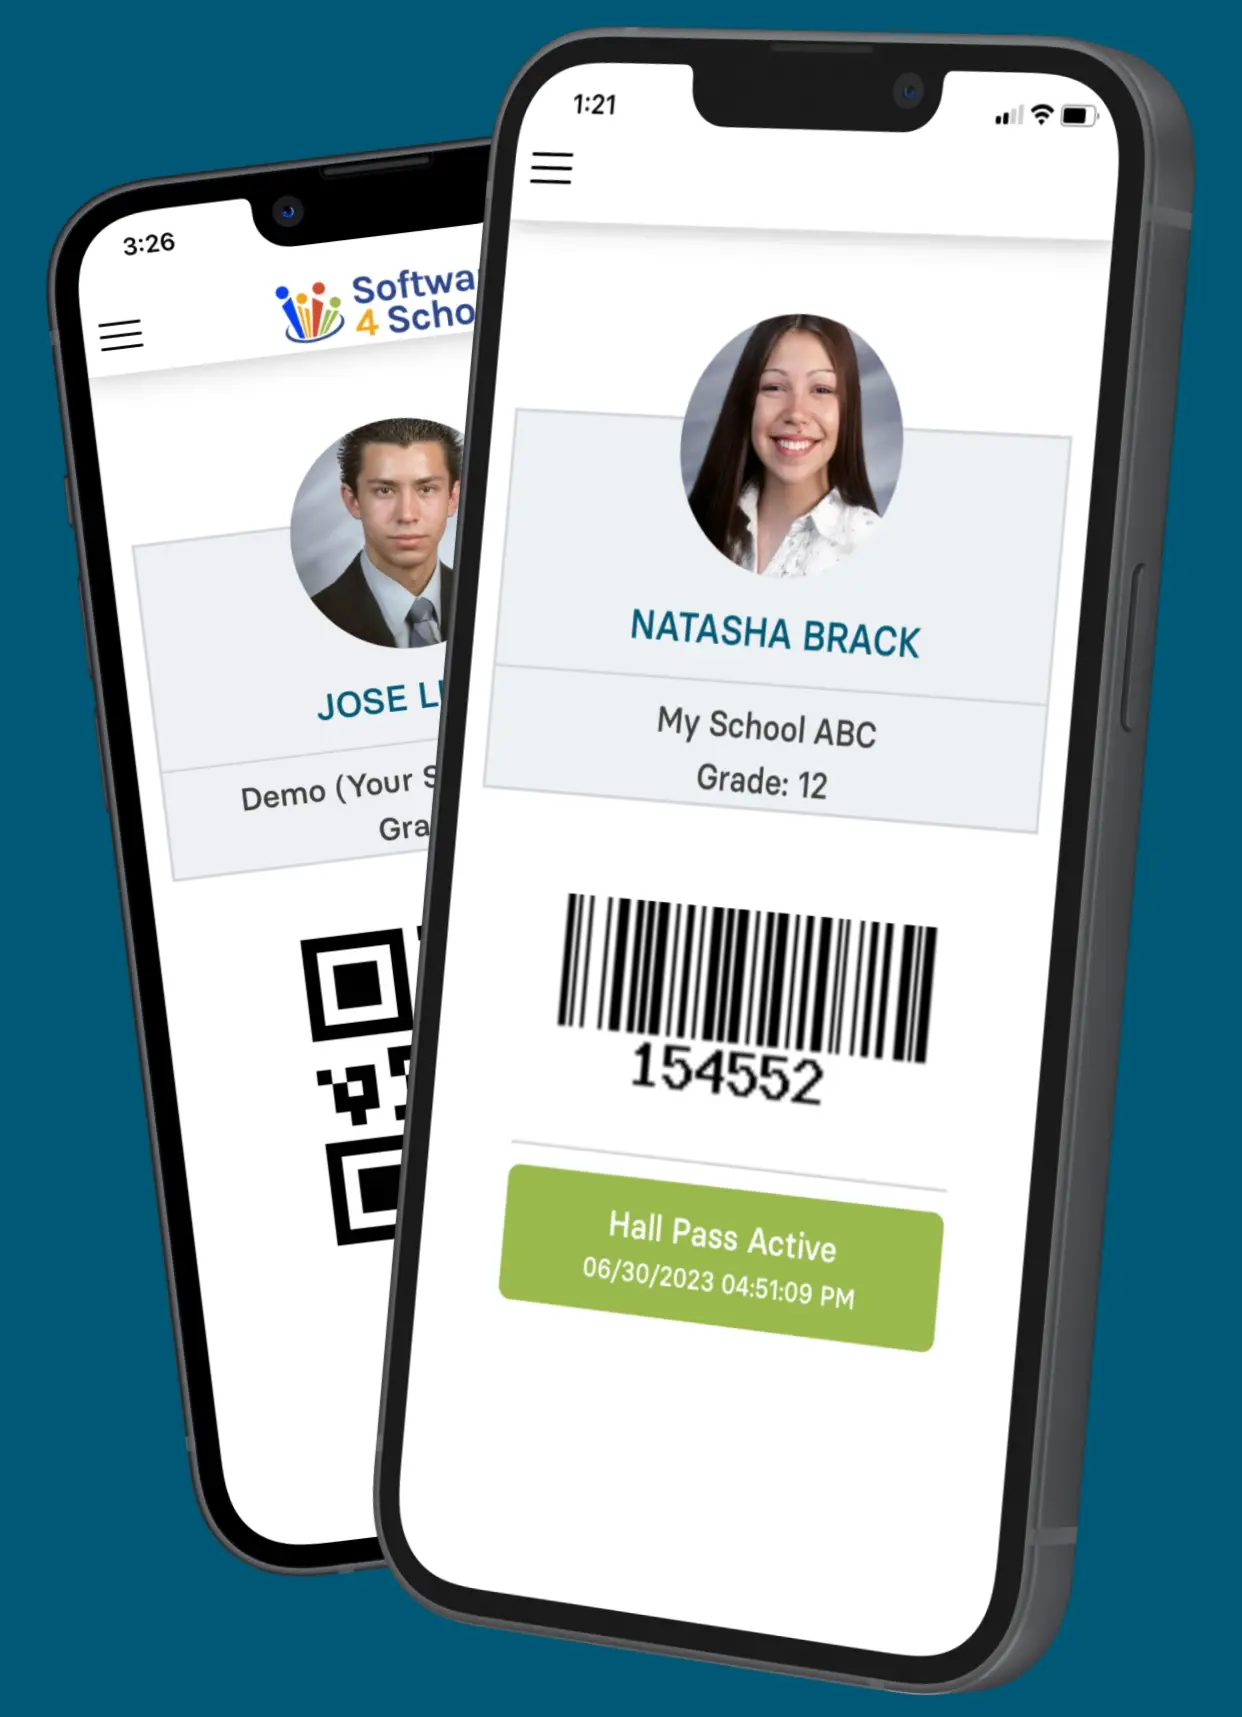 Digital Student ID cards